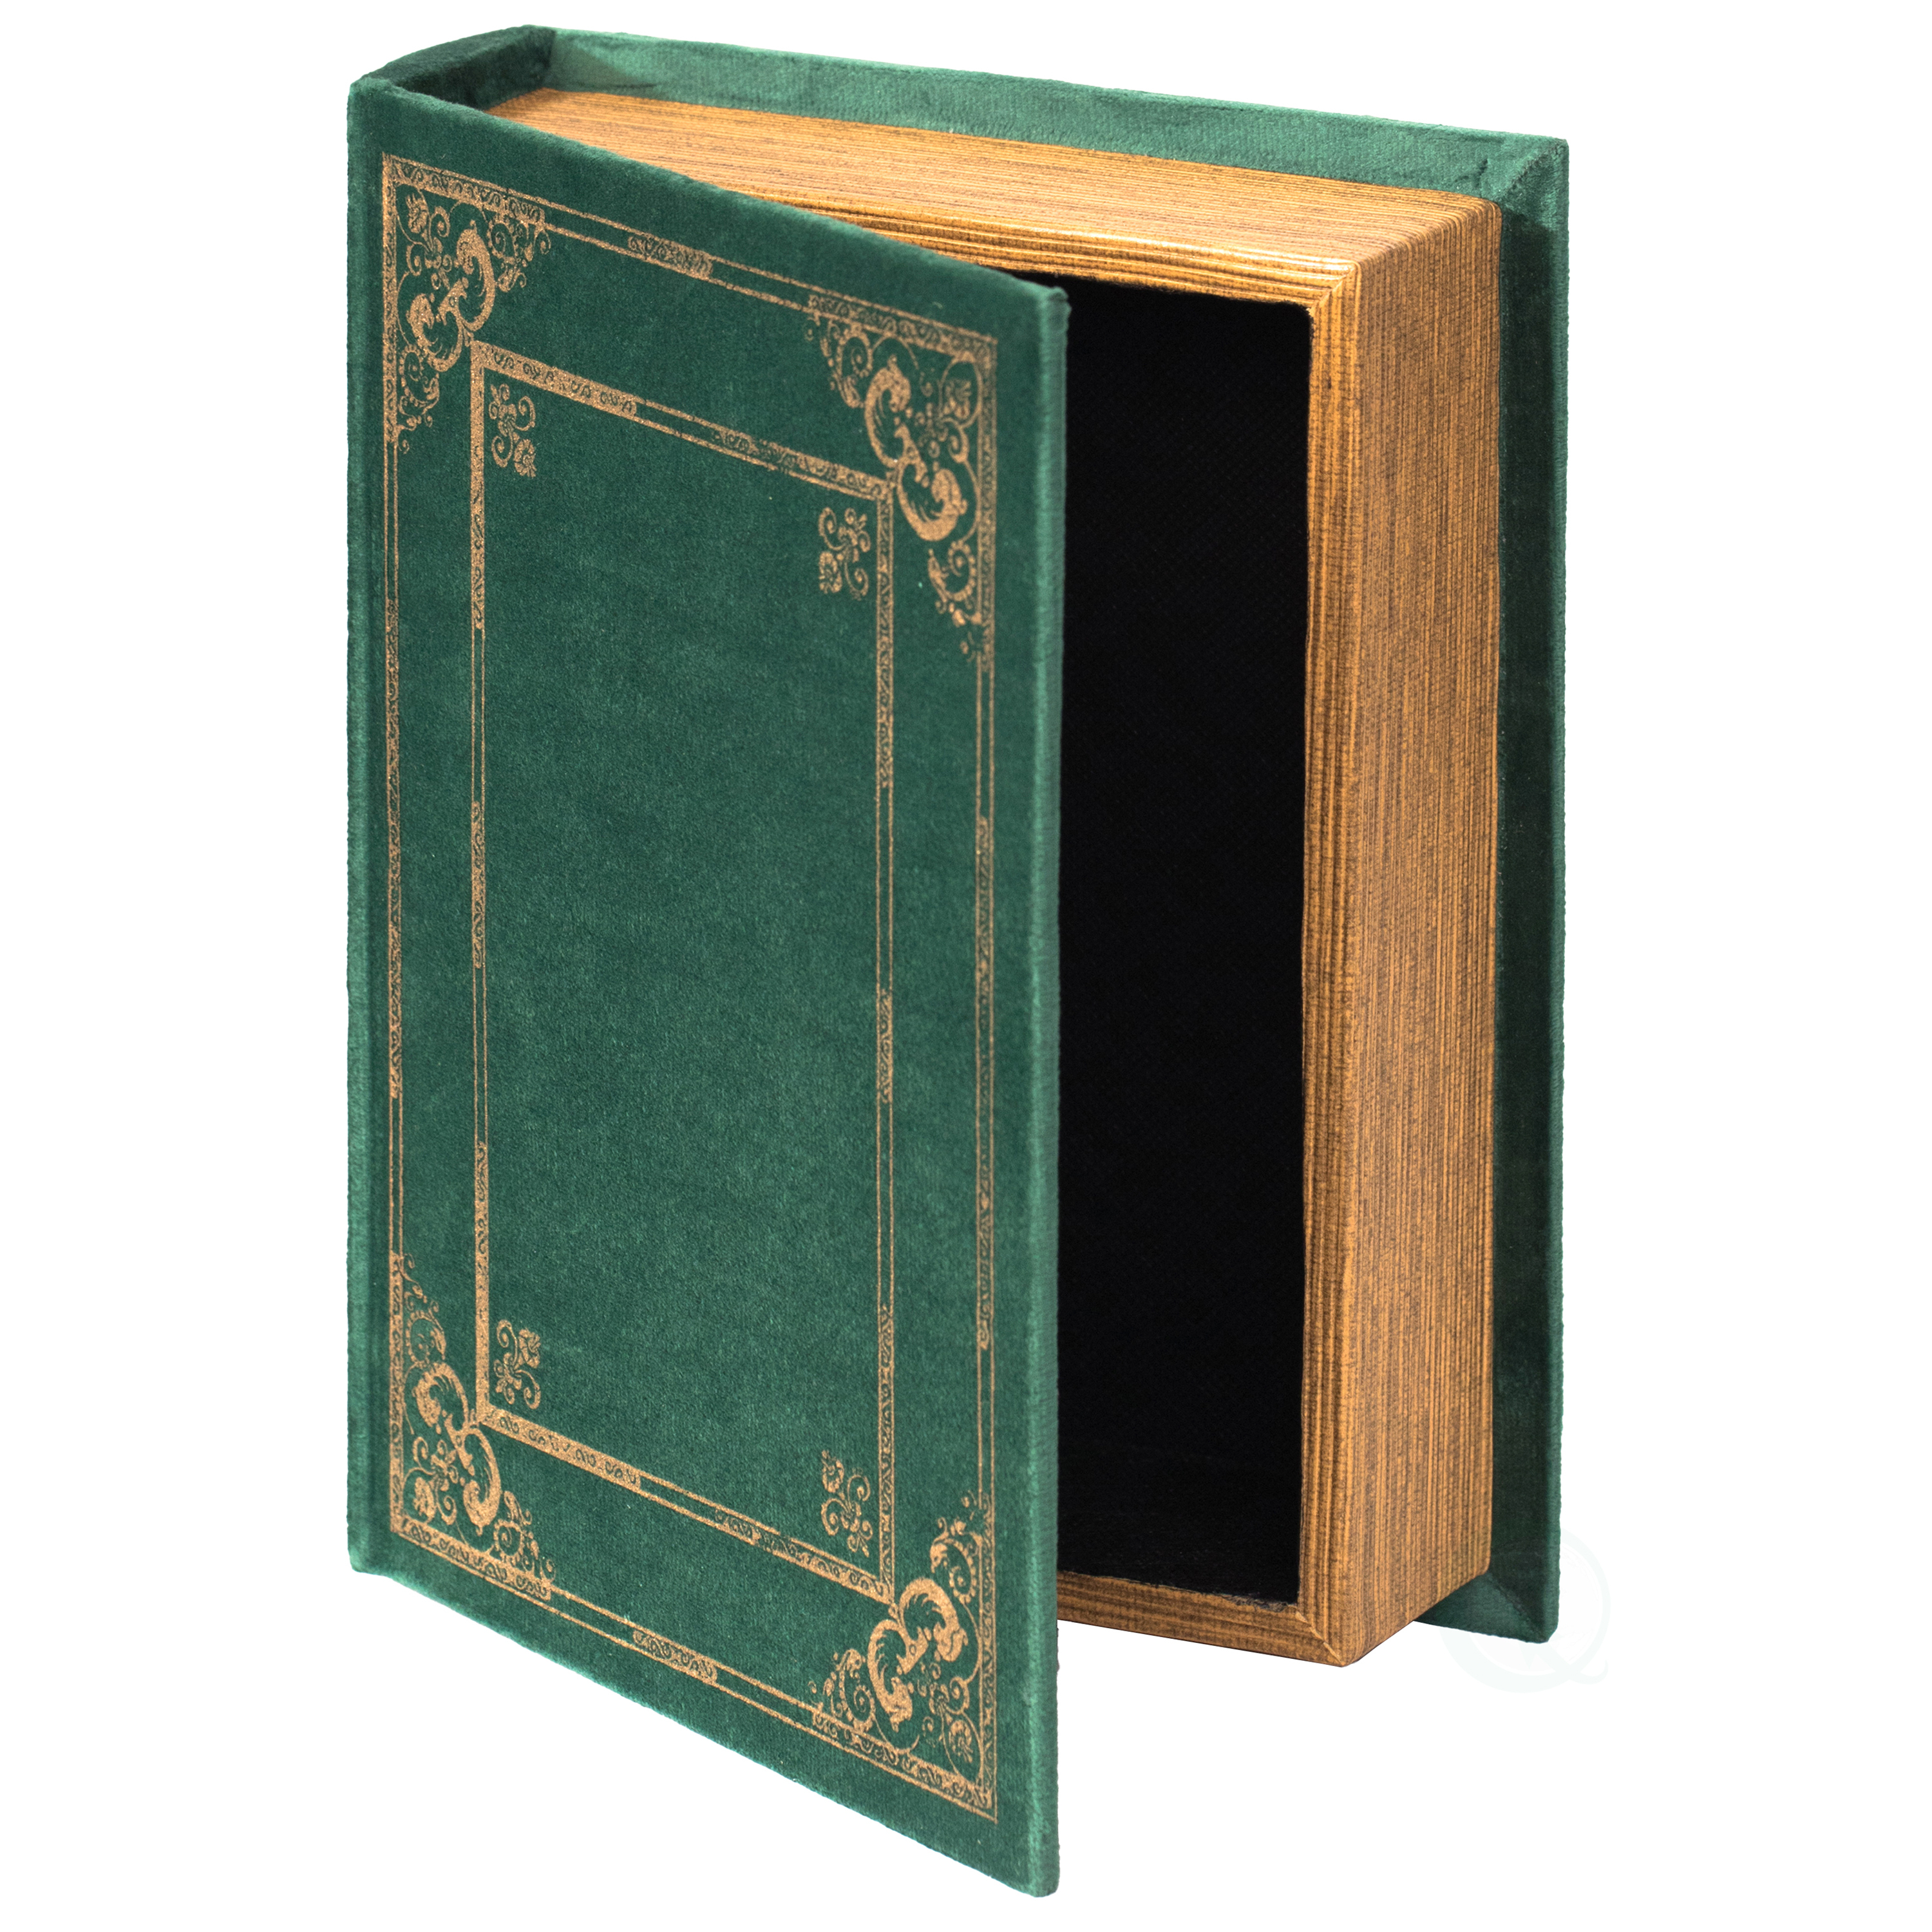 Decorative Vintage Book Shaped Trinket Storage Box - Green